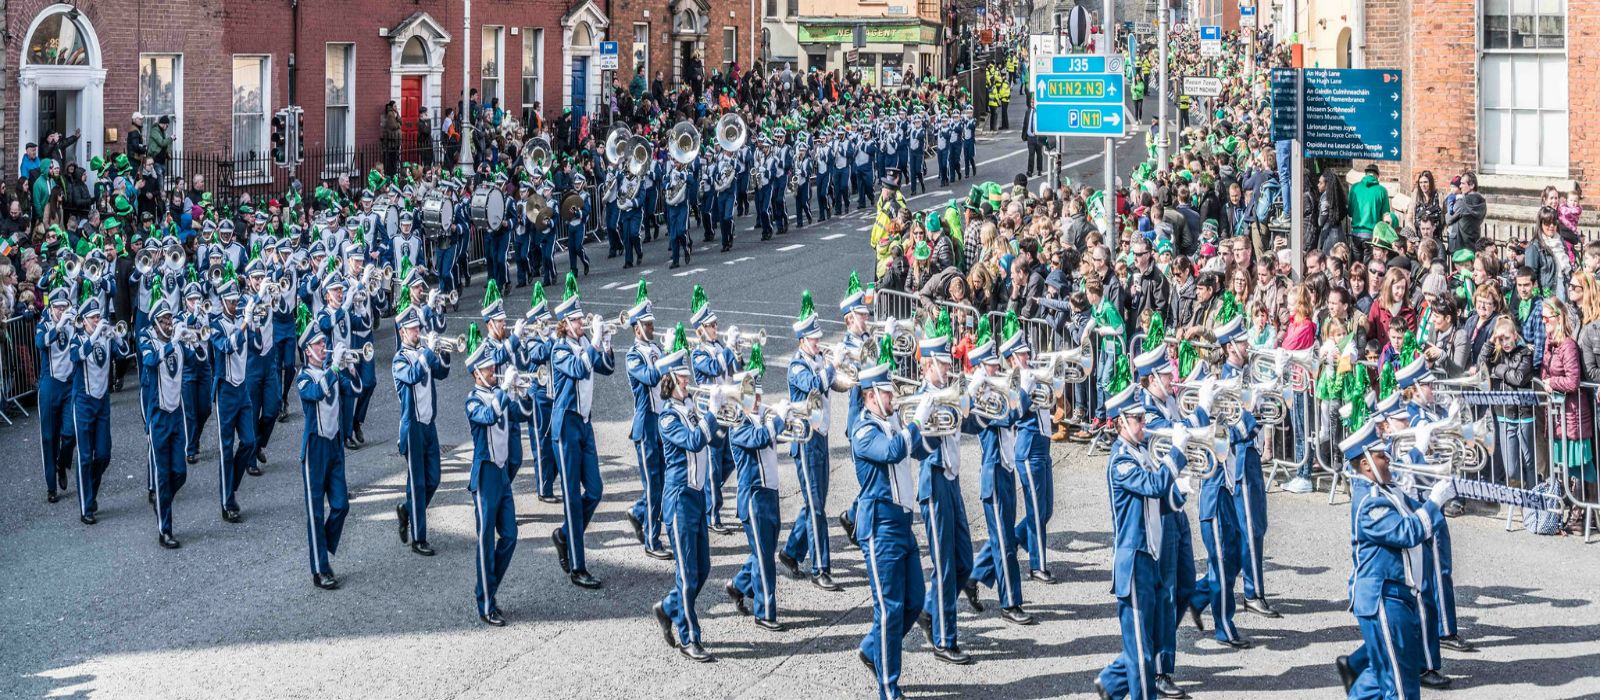 Marching band enjoying st.Patrick's day parade on marching band performance tours of Ireland.